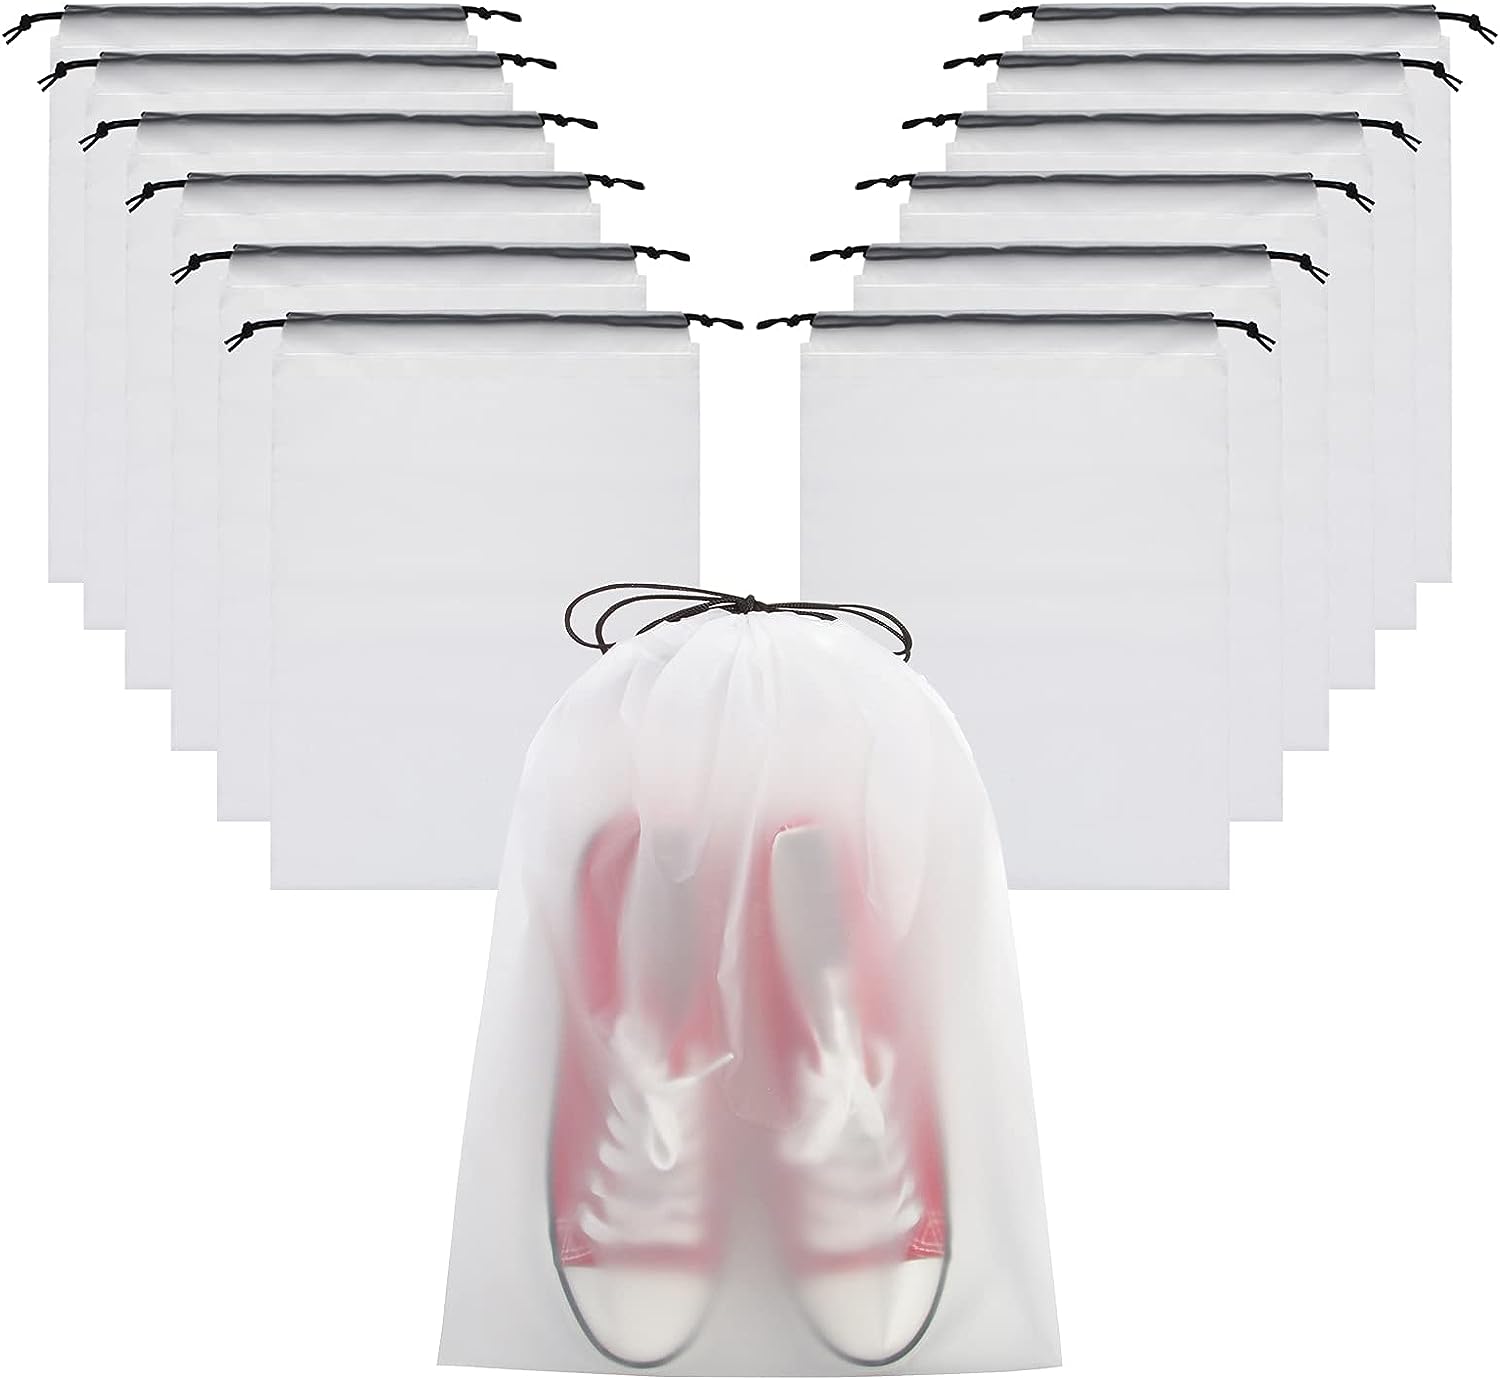 Vorspack Transparent Shoe Bags for Travel Large Clear [...]